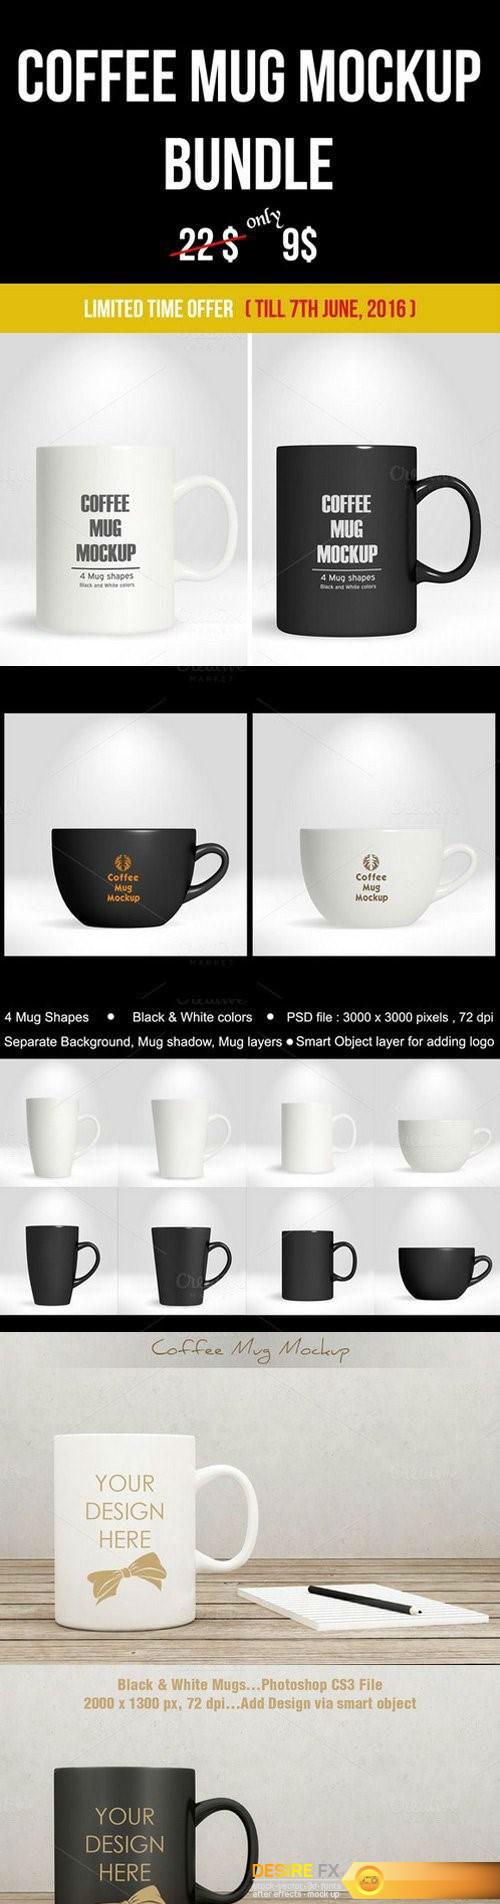 Coffee mug mockup bundle - 706765